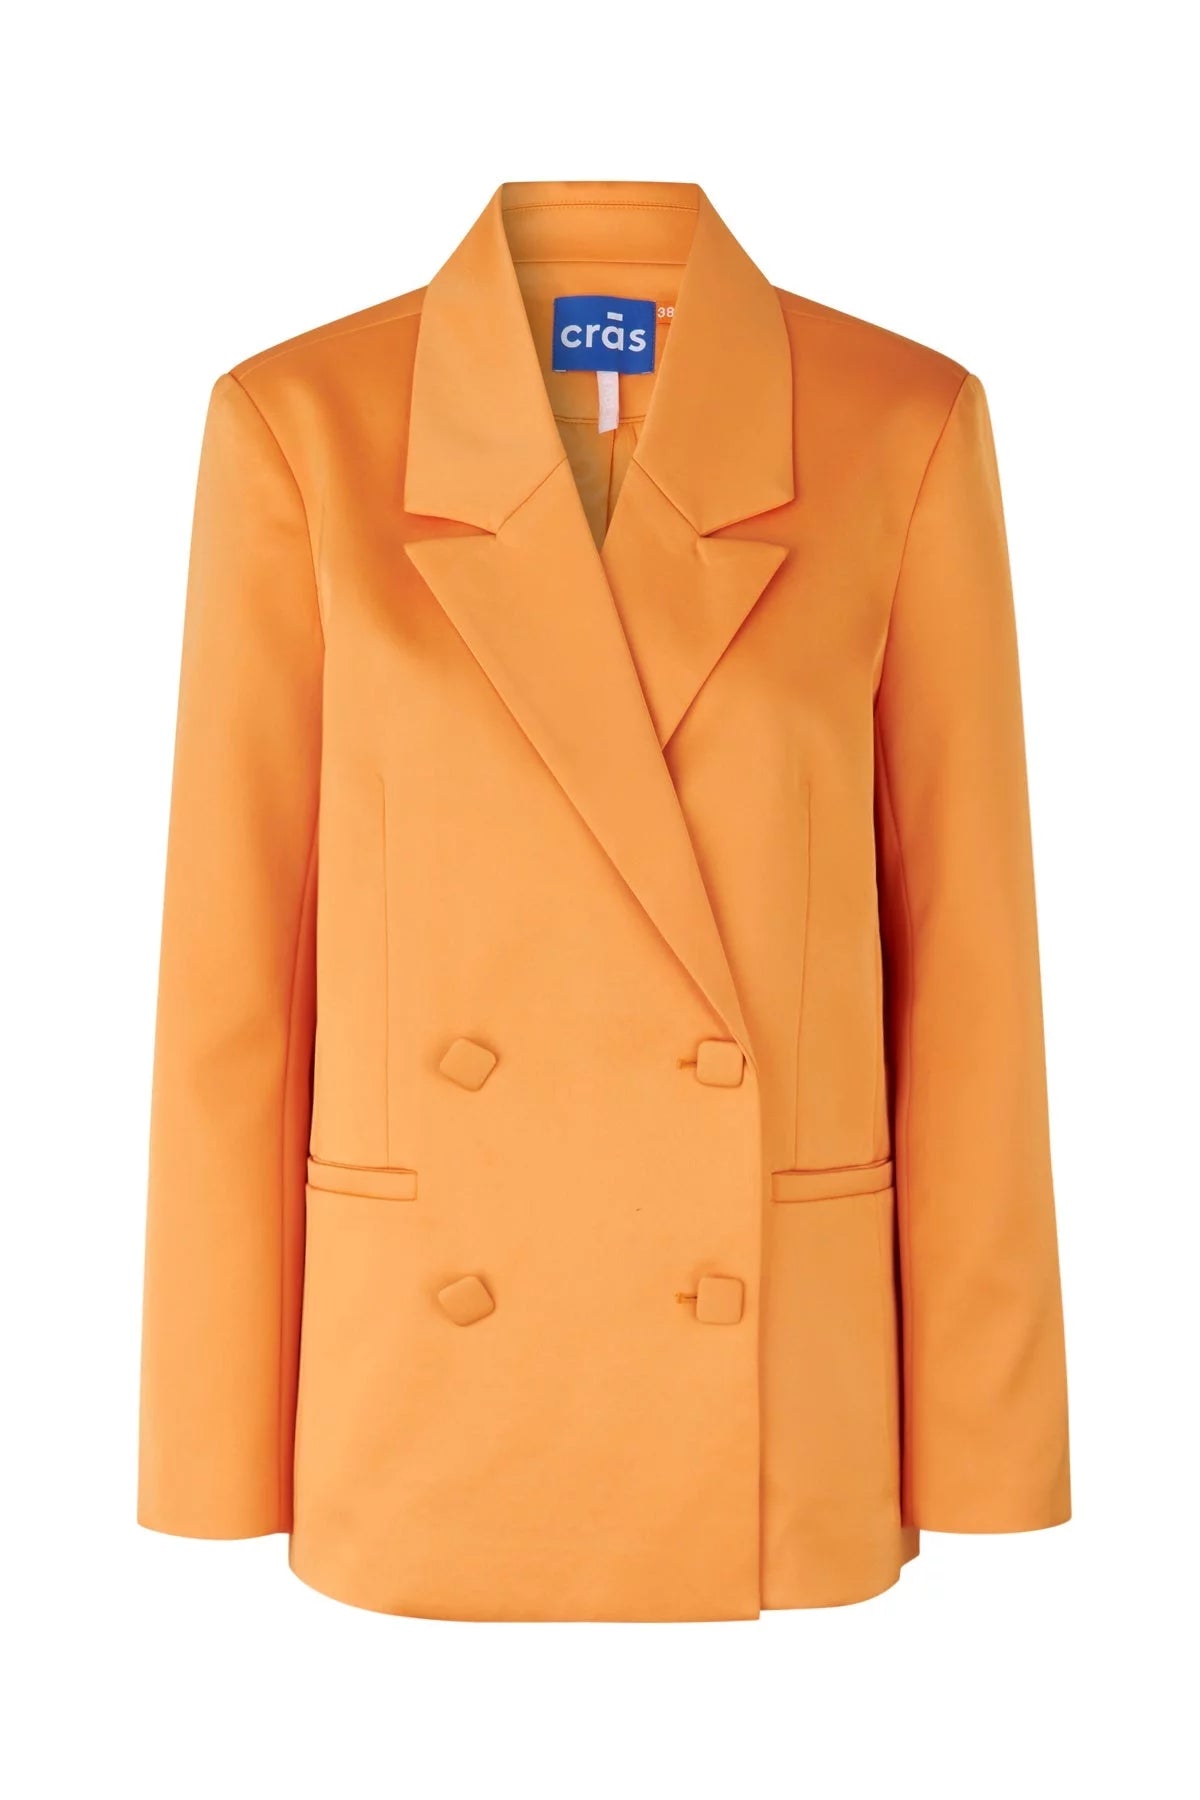 Samycras blazer i fra Cras er en statementjakke med kule knapper og en deilig mock orangefarge.